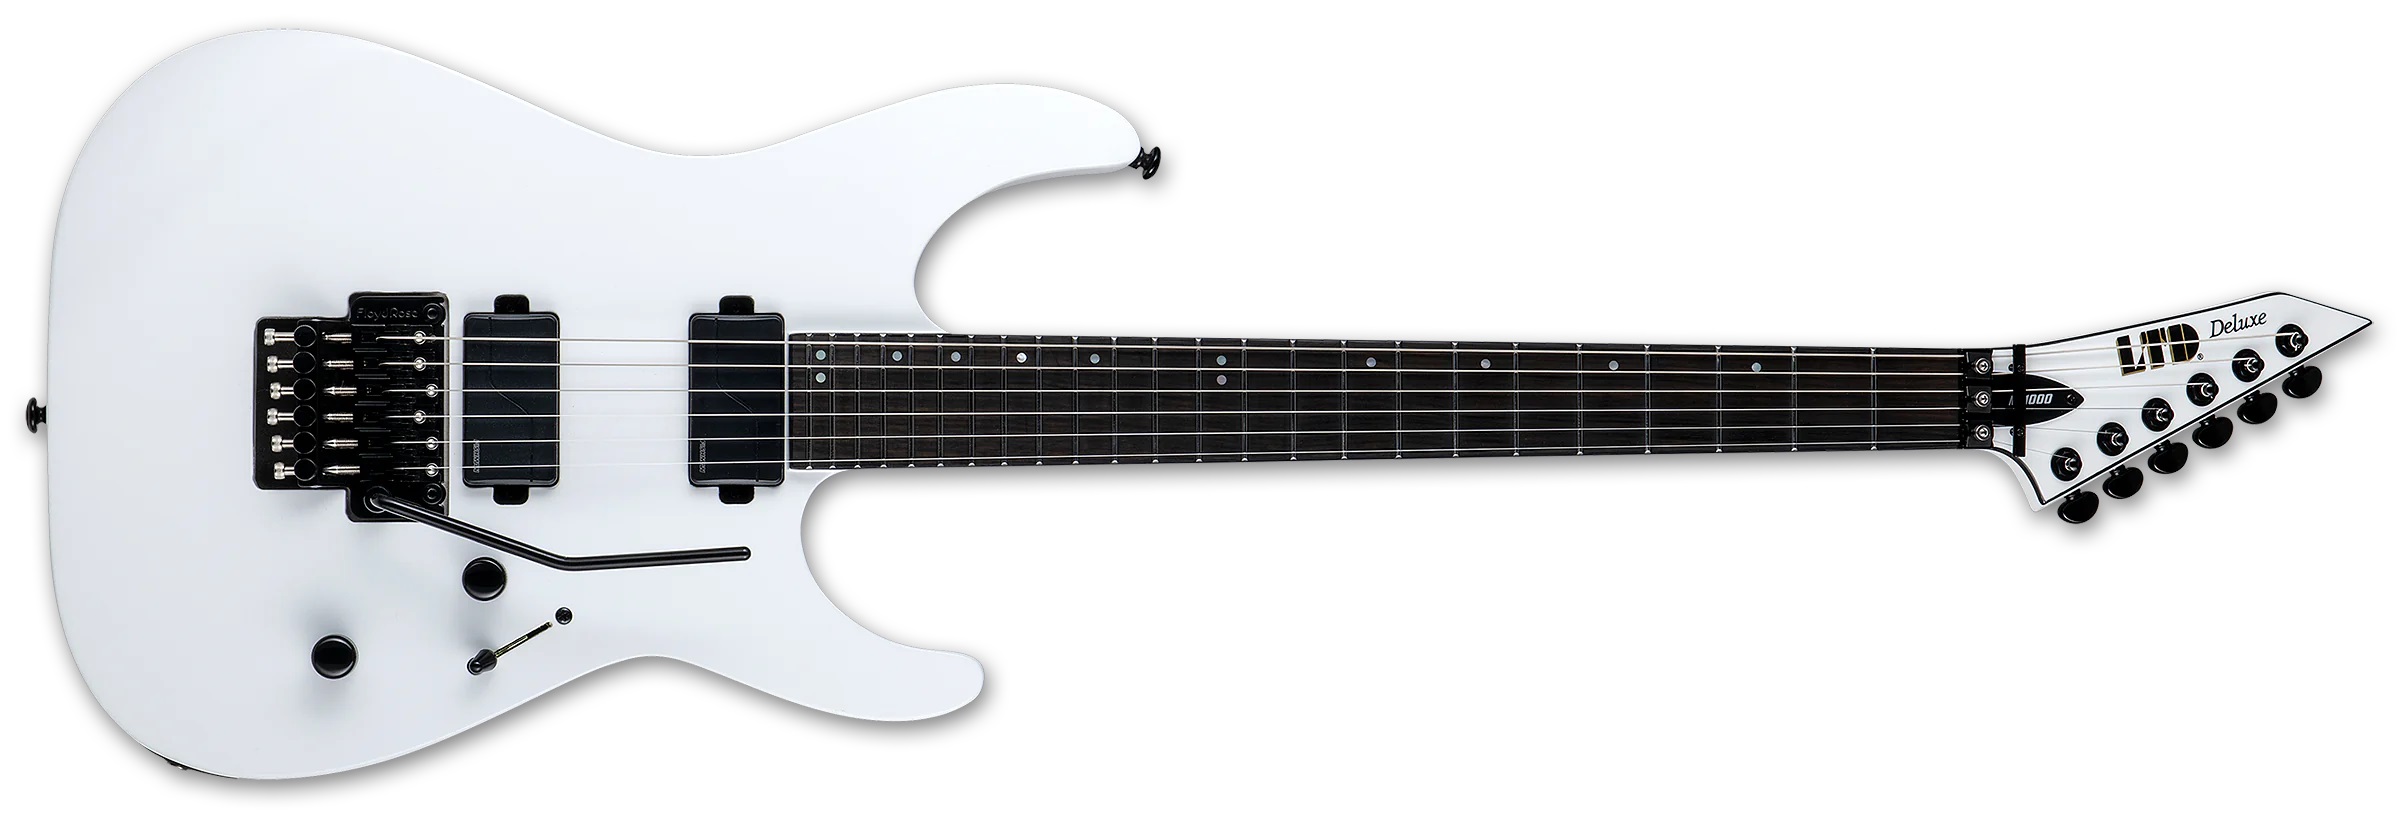 ESP LTD M-1000 Electric Guitar on a white background